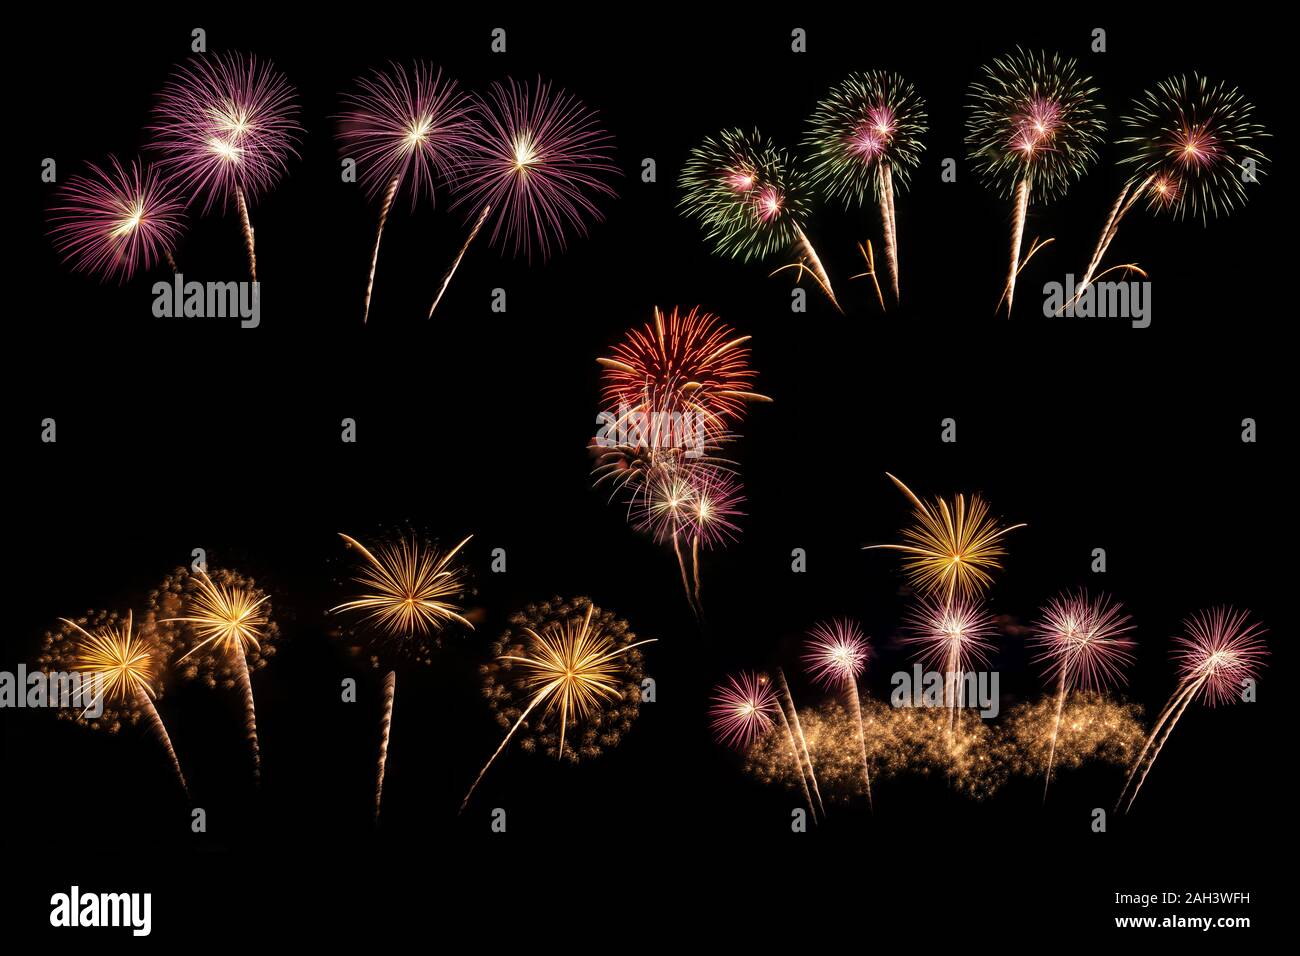 Colorful Fireworks display celebration Stock Photo